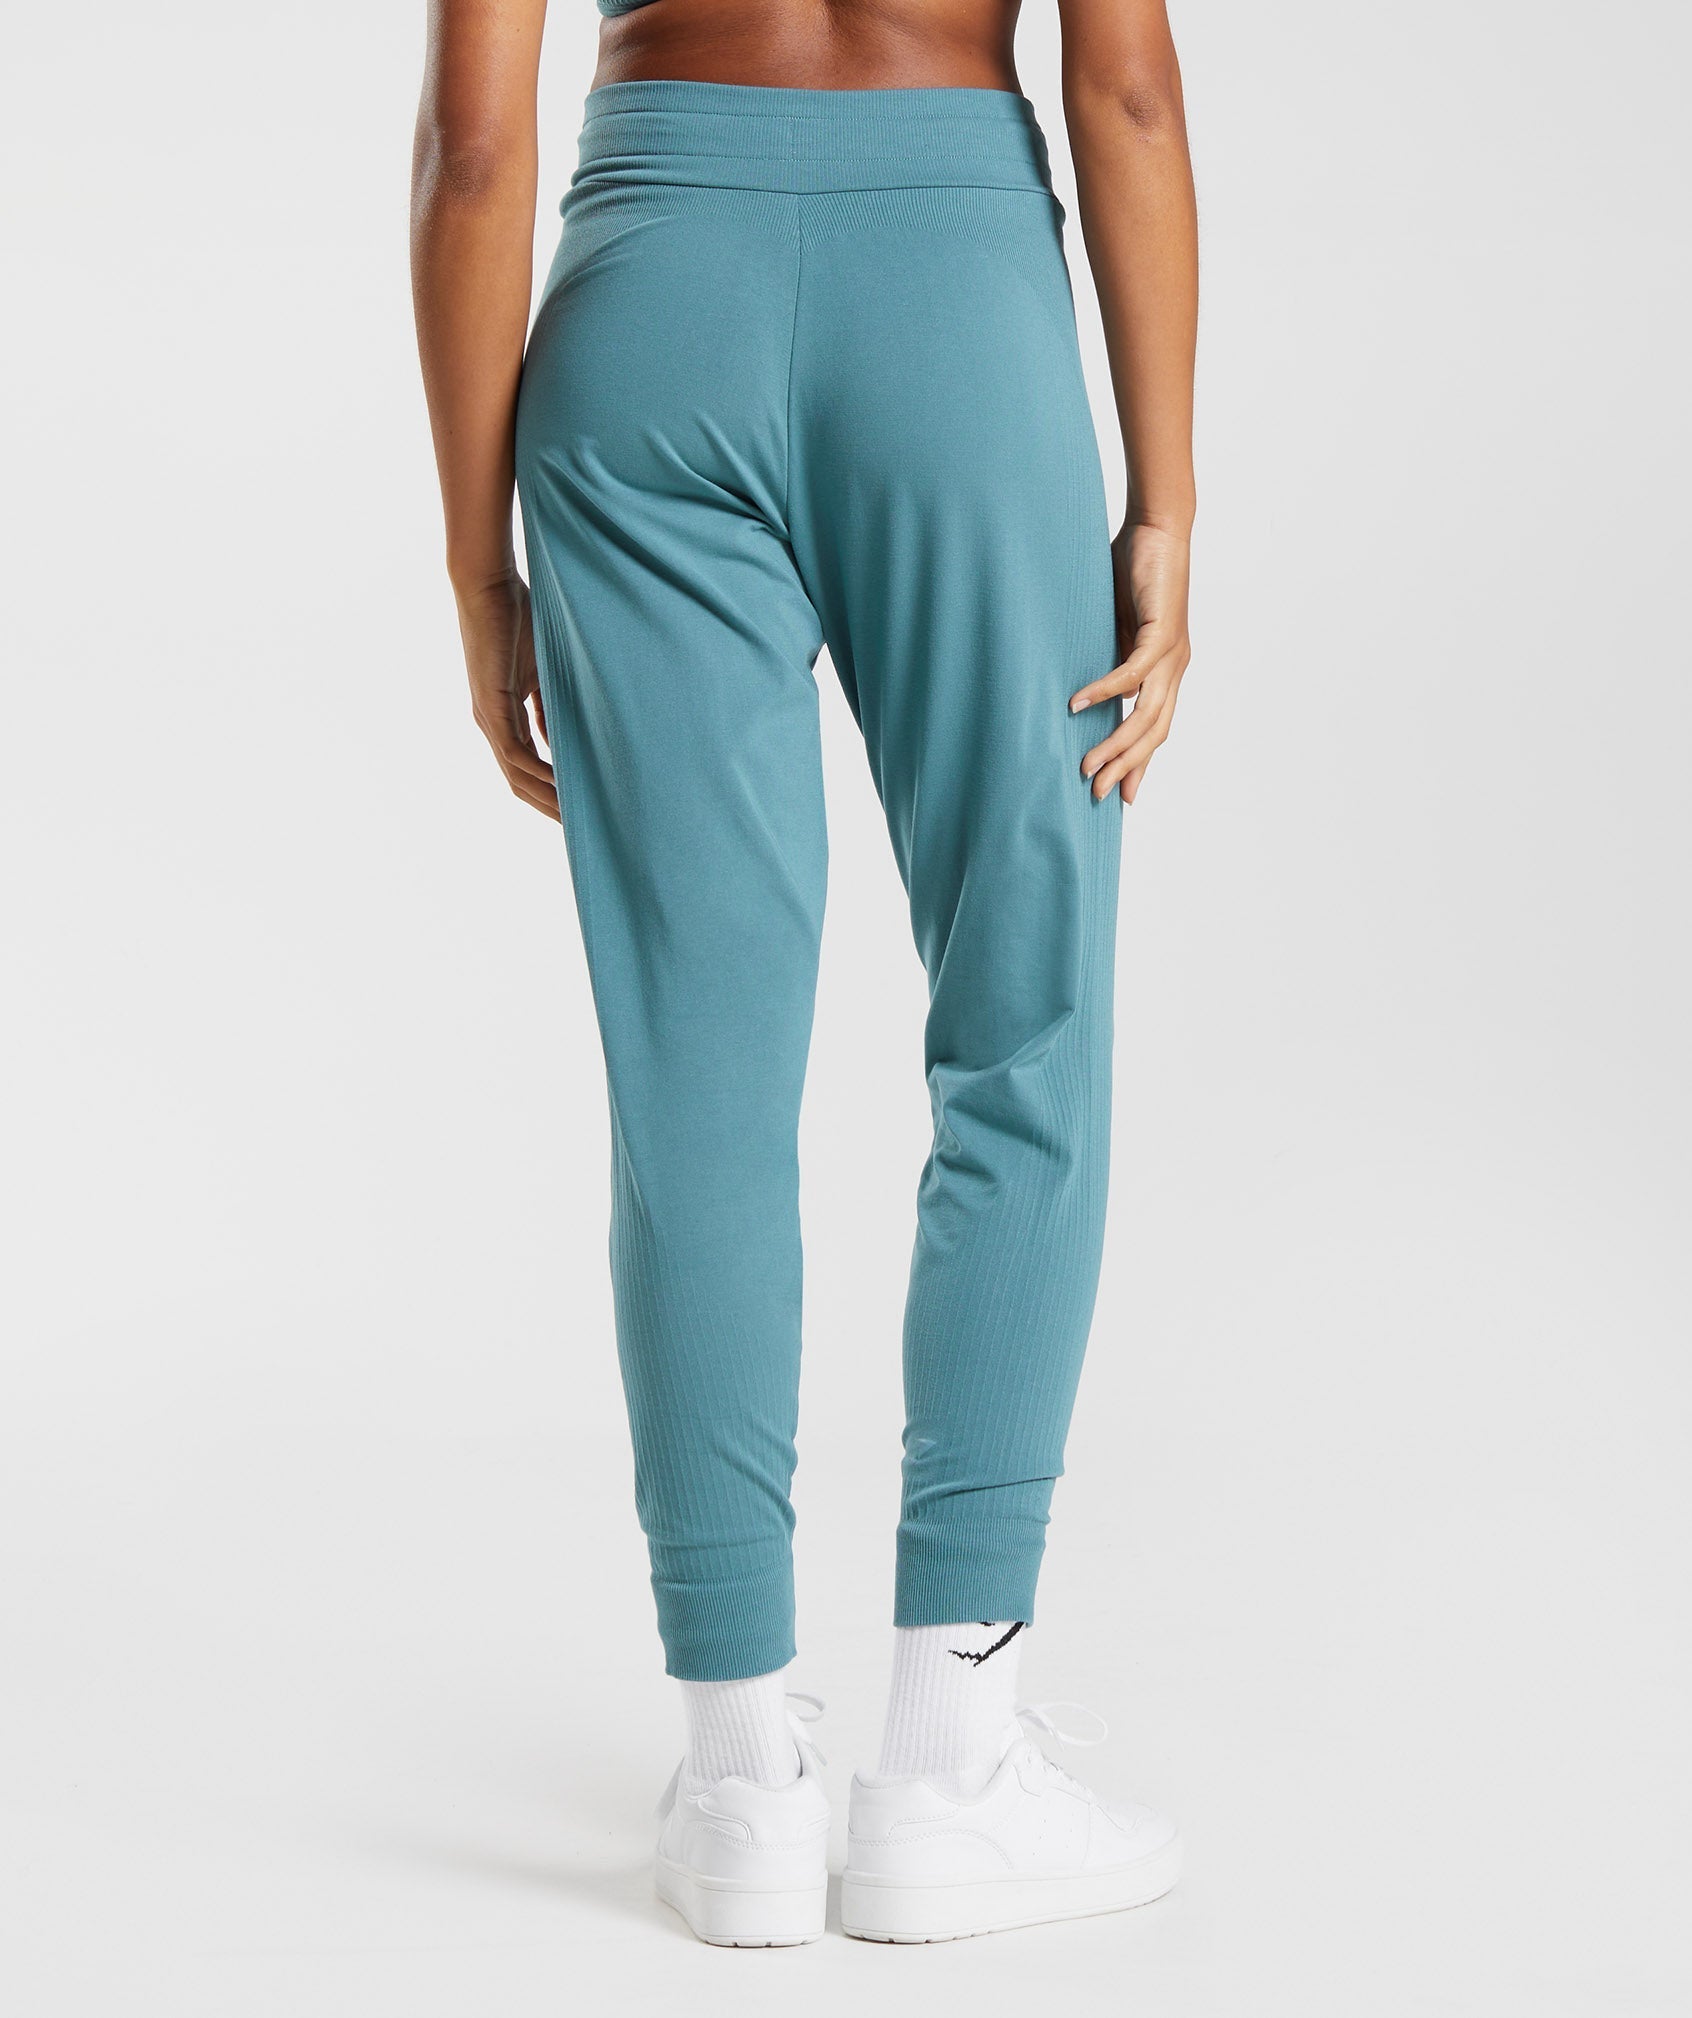 Nike dri fit Camo sweatpants small lounge pants get fit womens